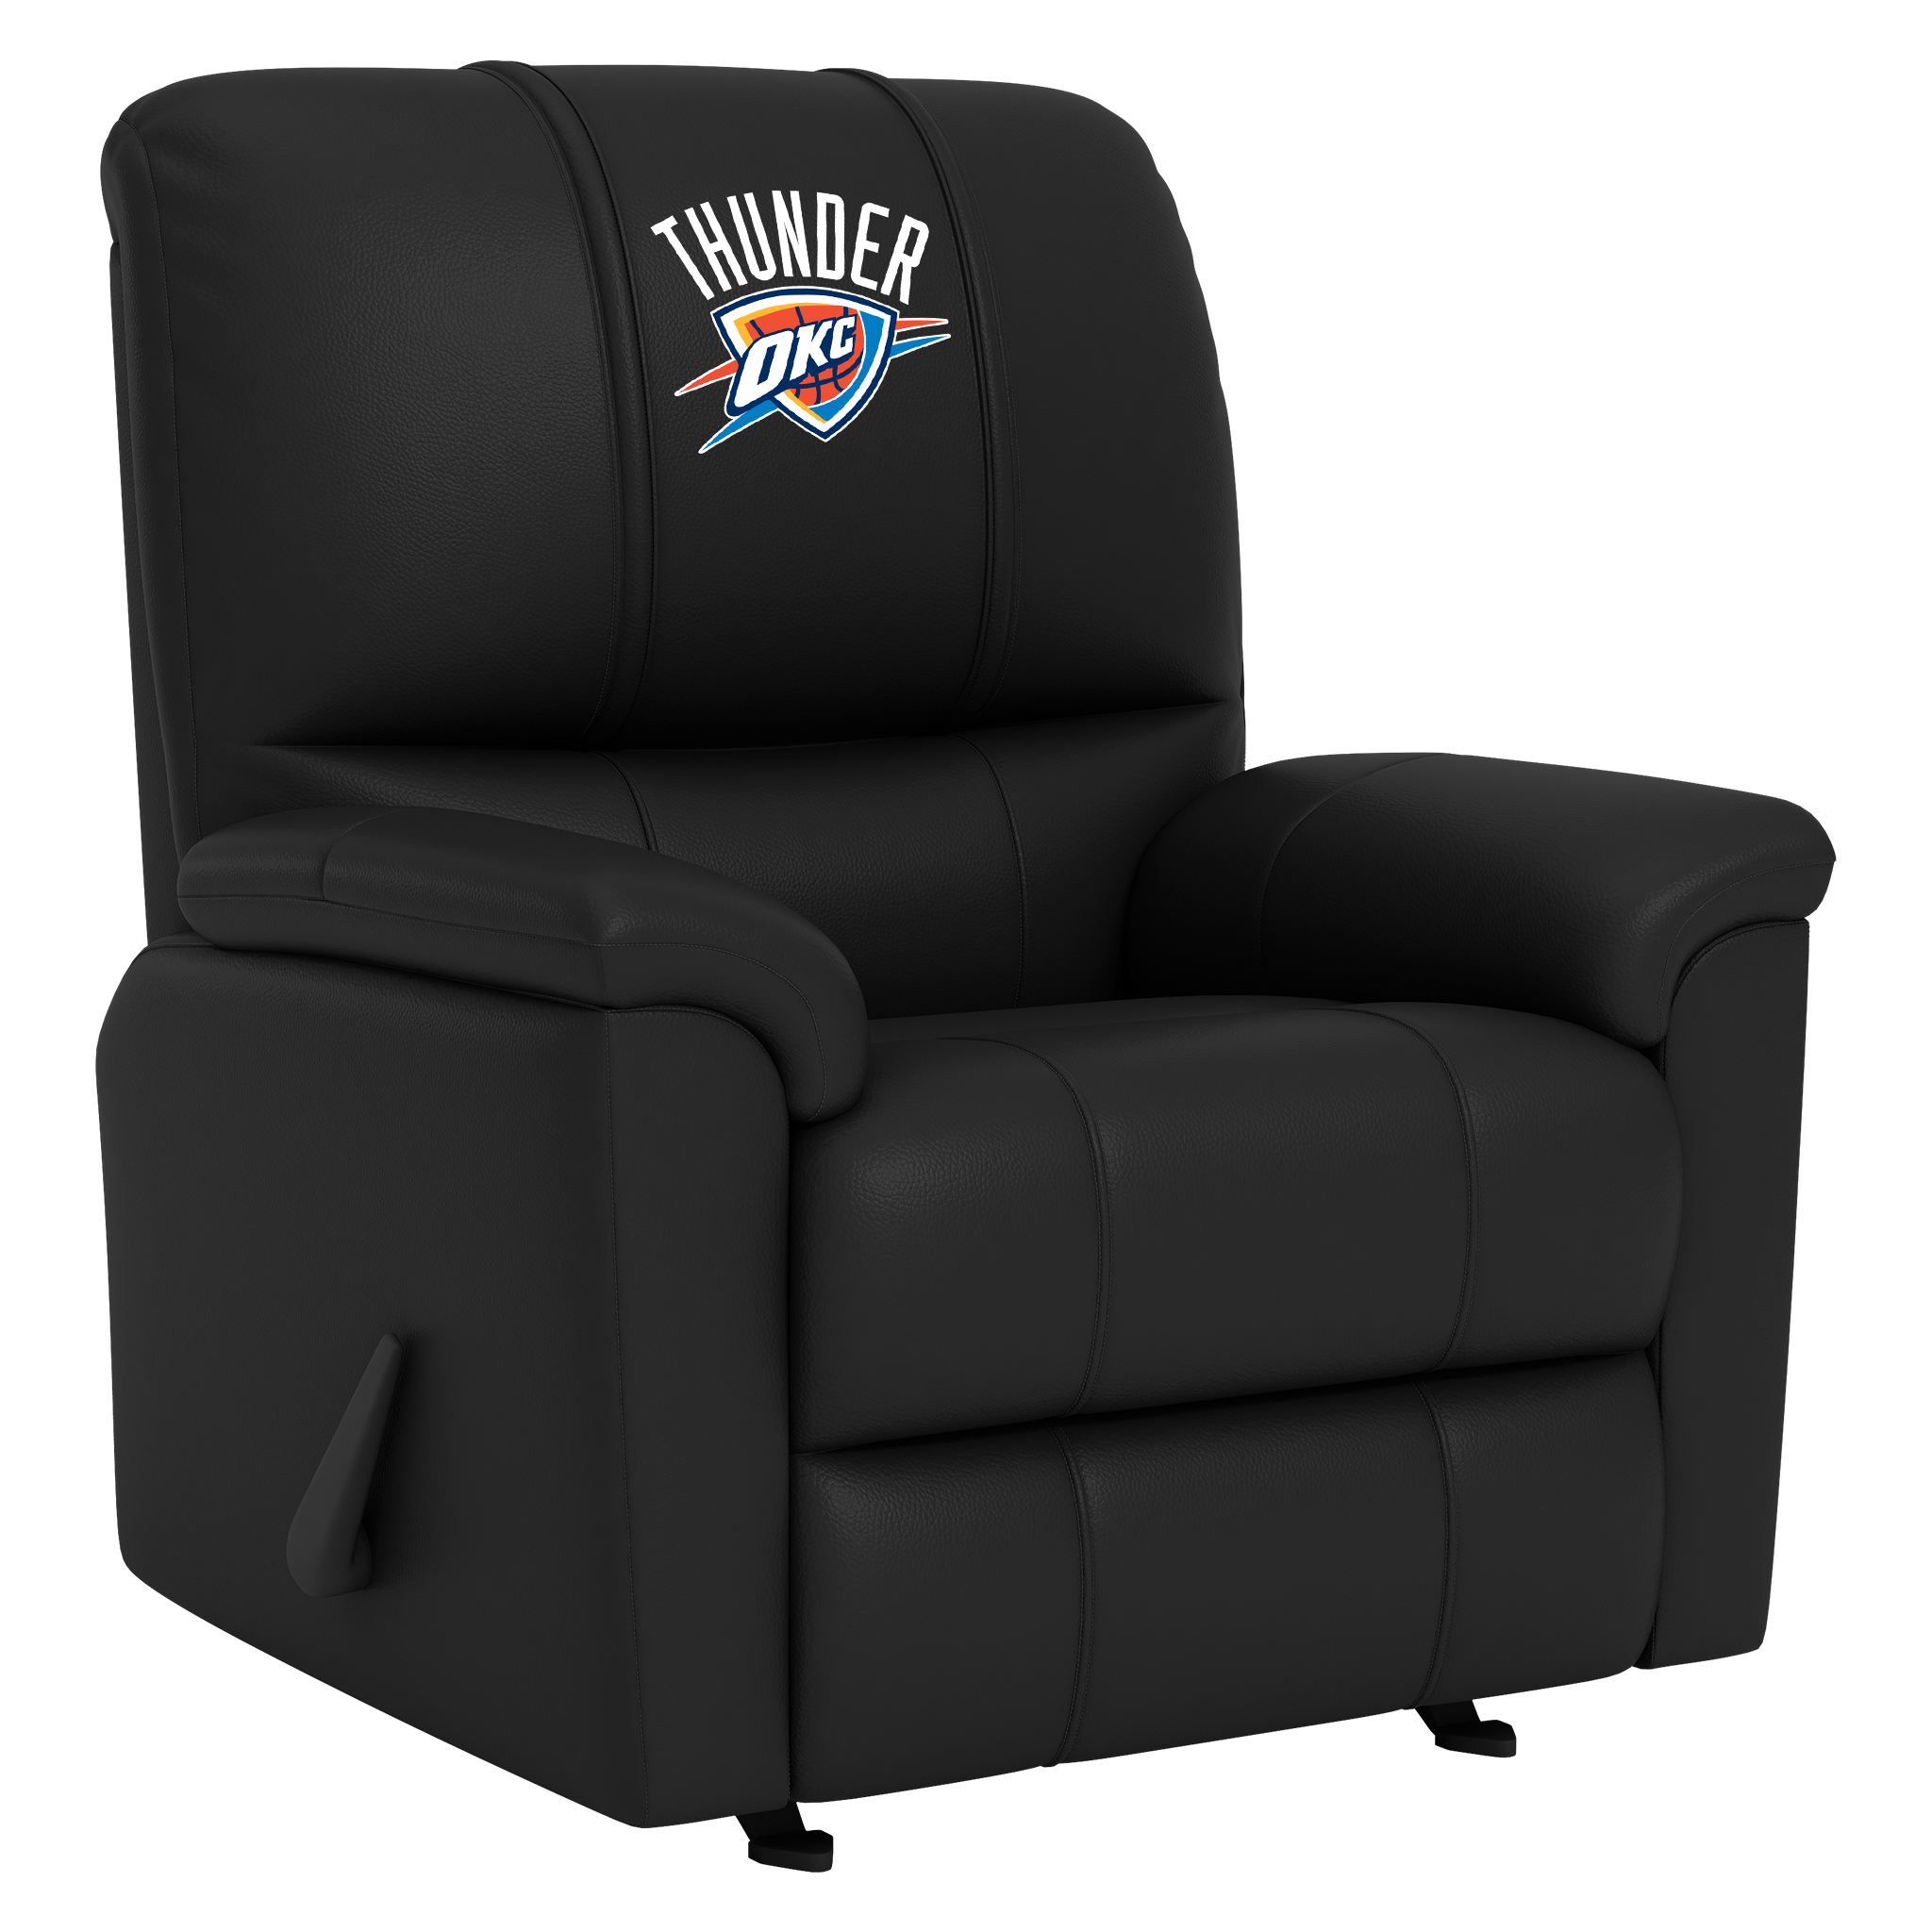 Philadelphia 76ers Silver Club Chair with Philadelphia 76ers Primary